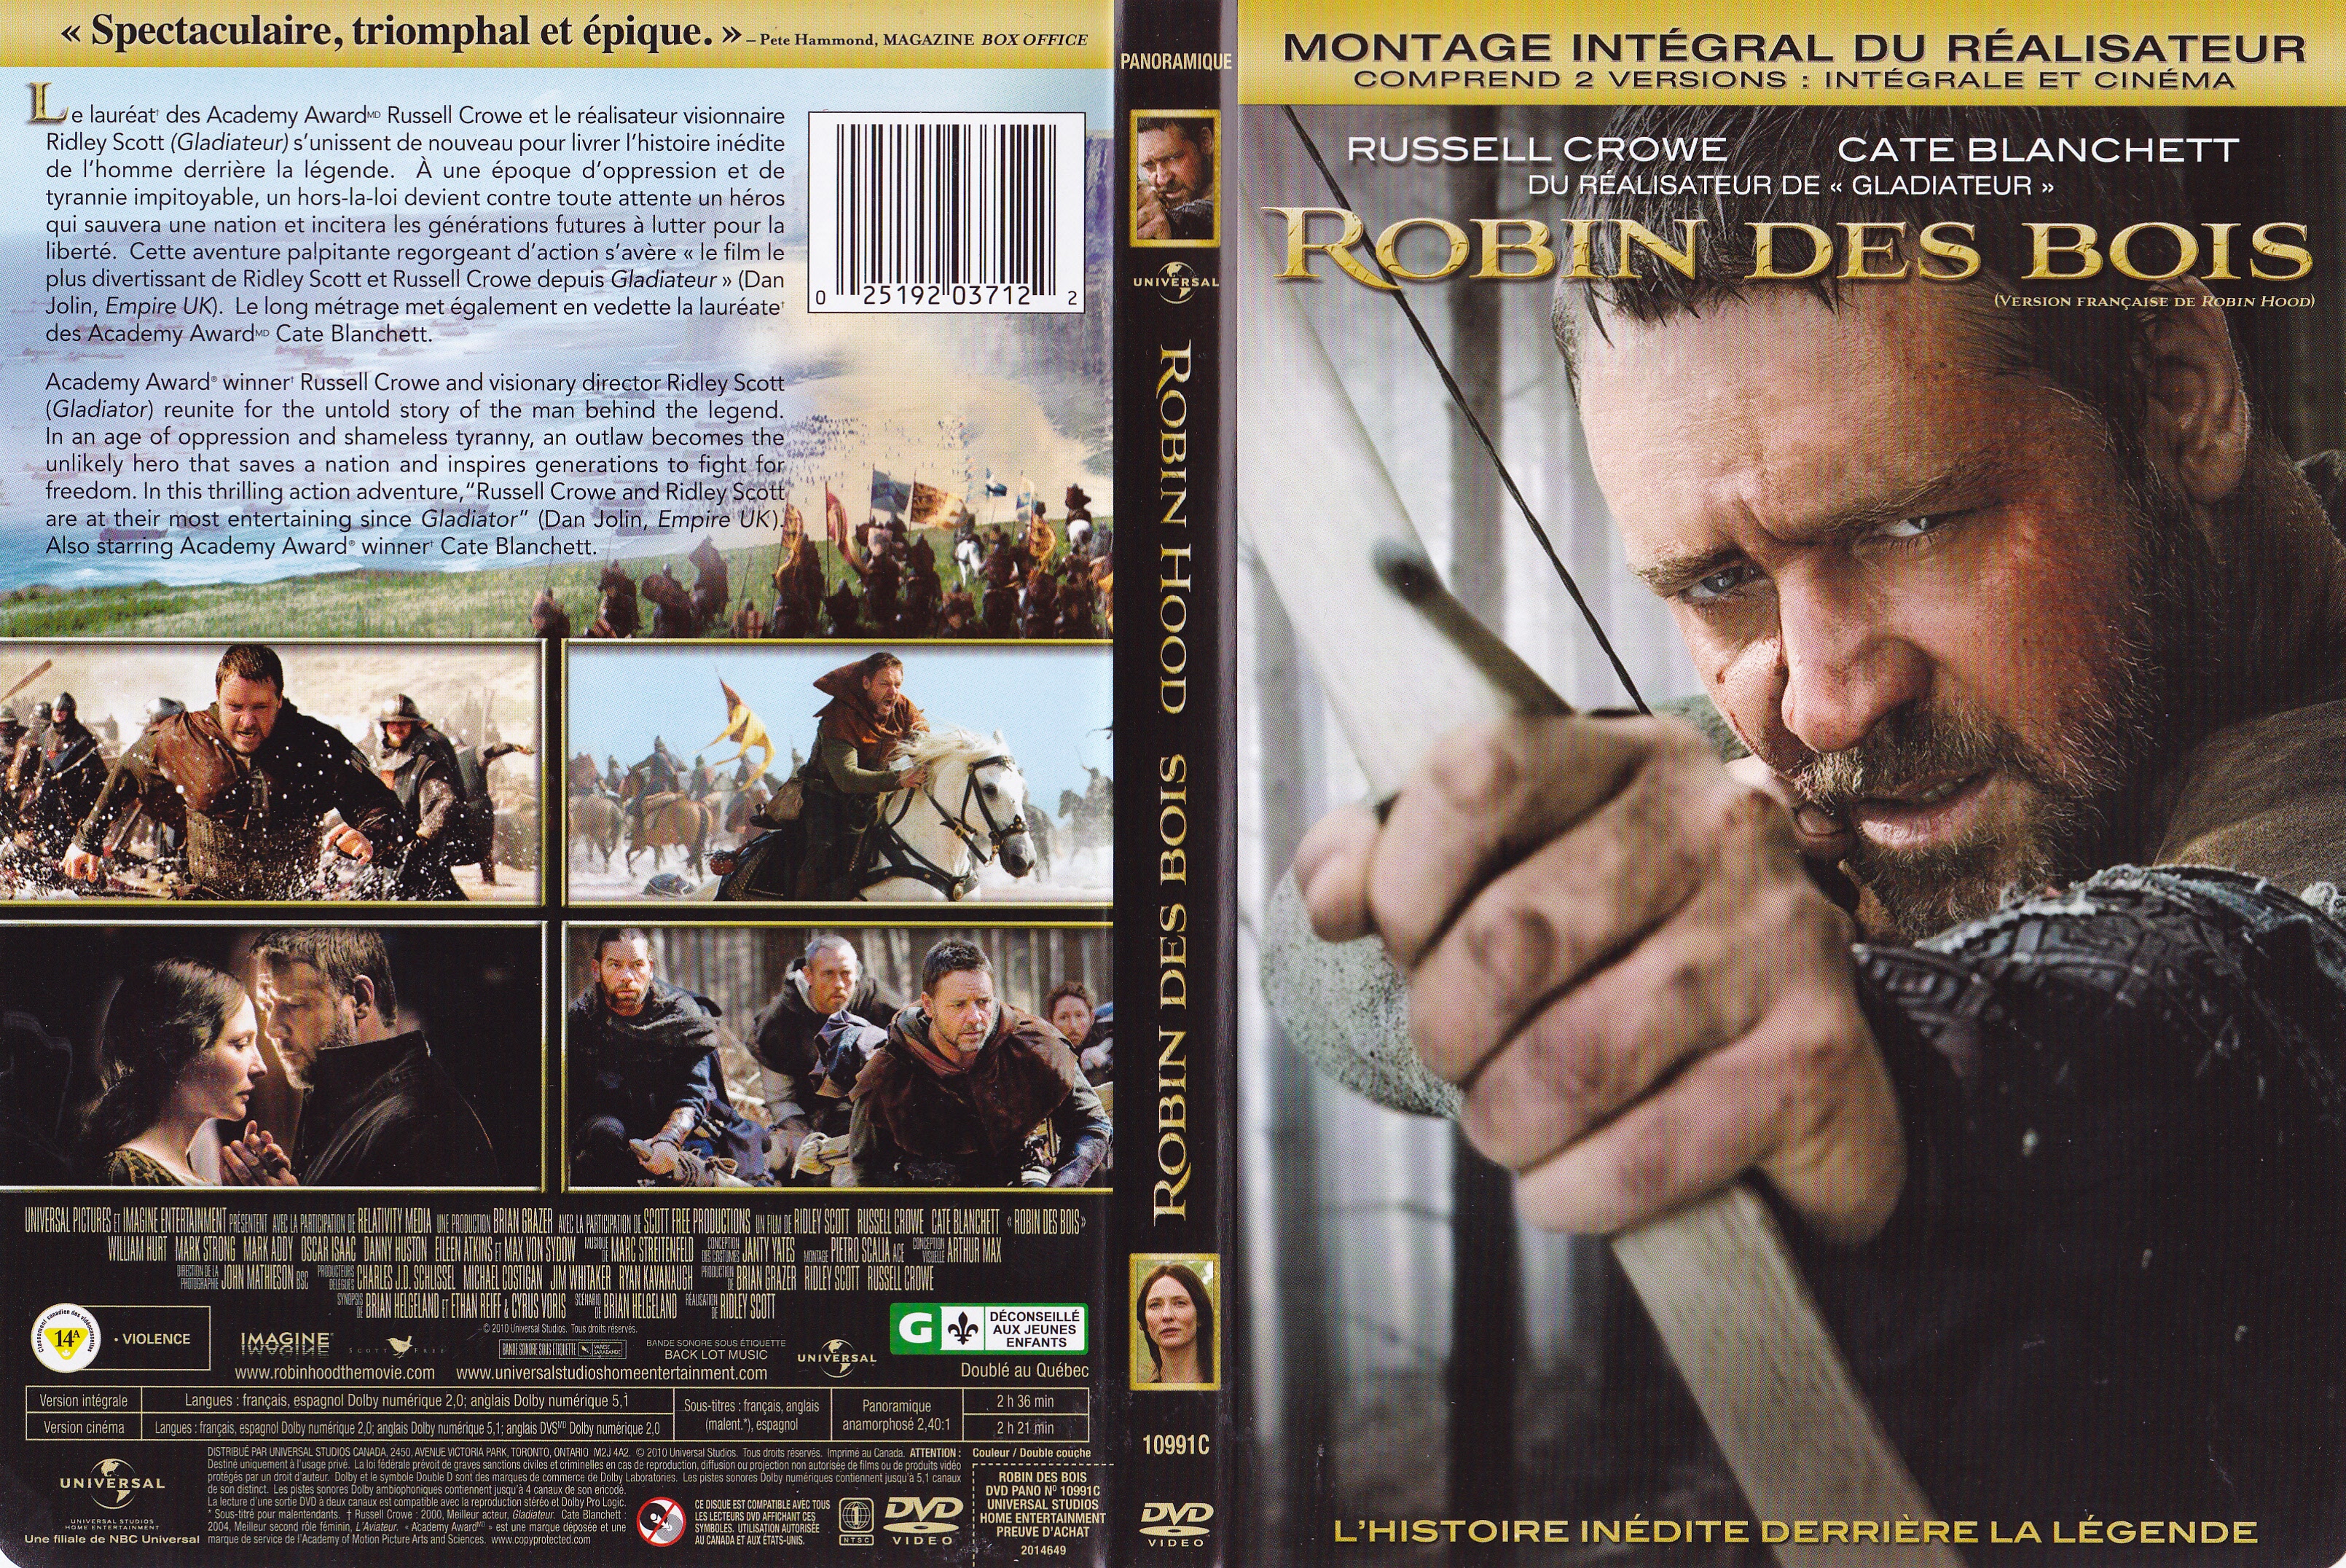 Jaquette DVD Robin des Bois - Robin hood (Canadienne)